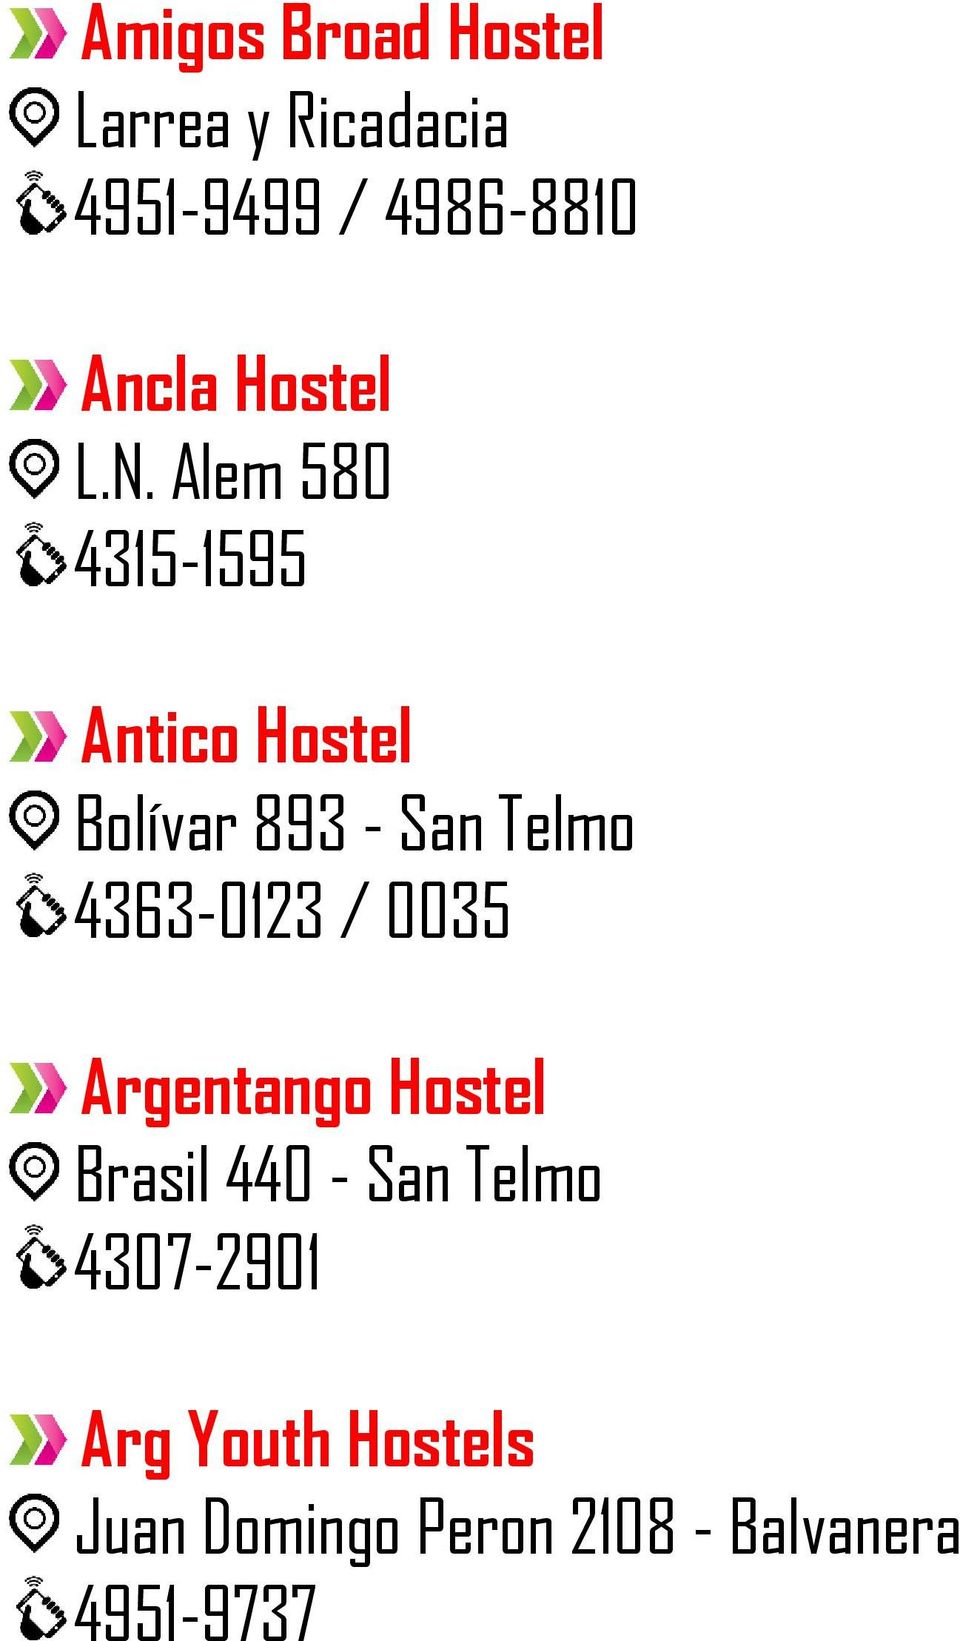 Alem 580 4315-1595 Antico Hostel Bolívar 893 - San Telmo 4363-0123